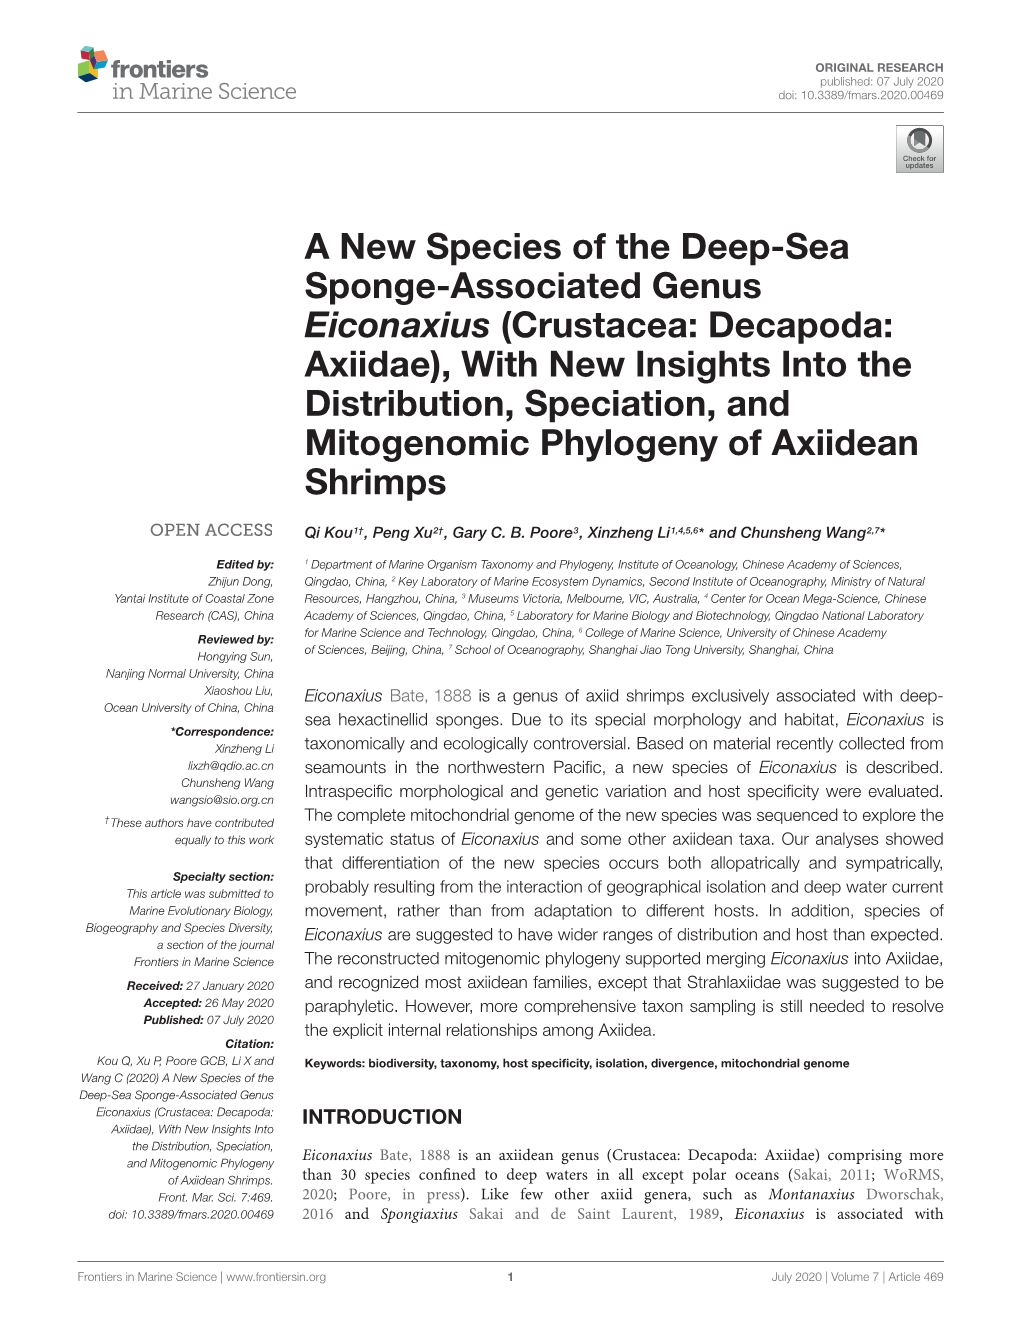 A New Species of the Deep-Sea Sponge-Associated